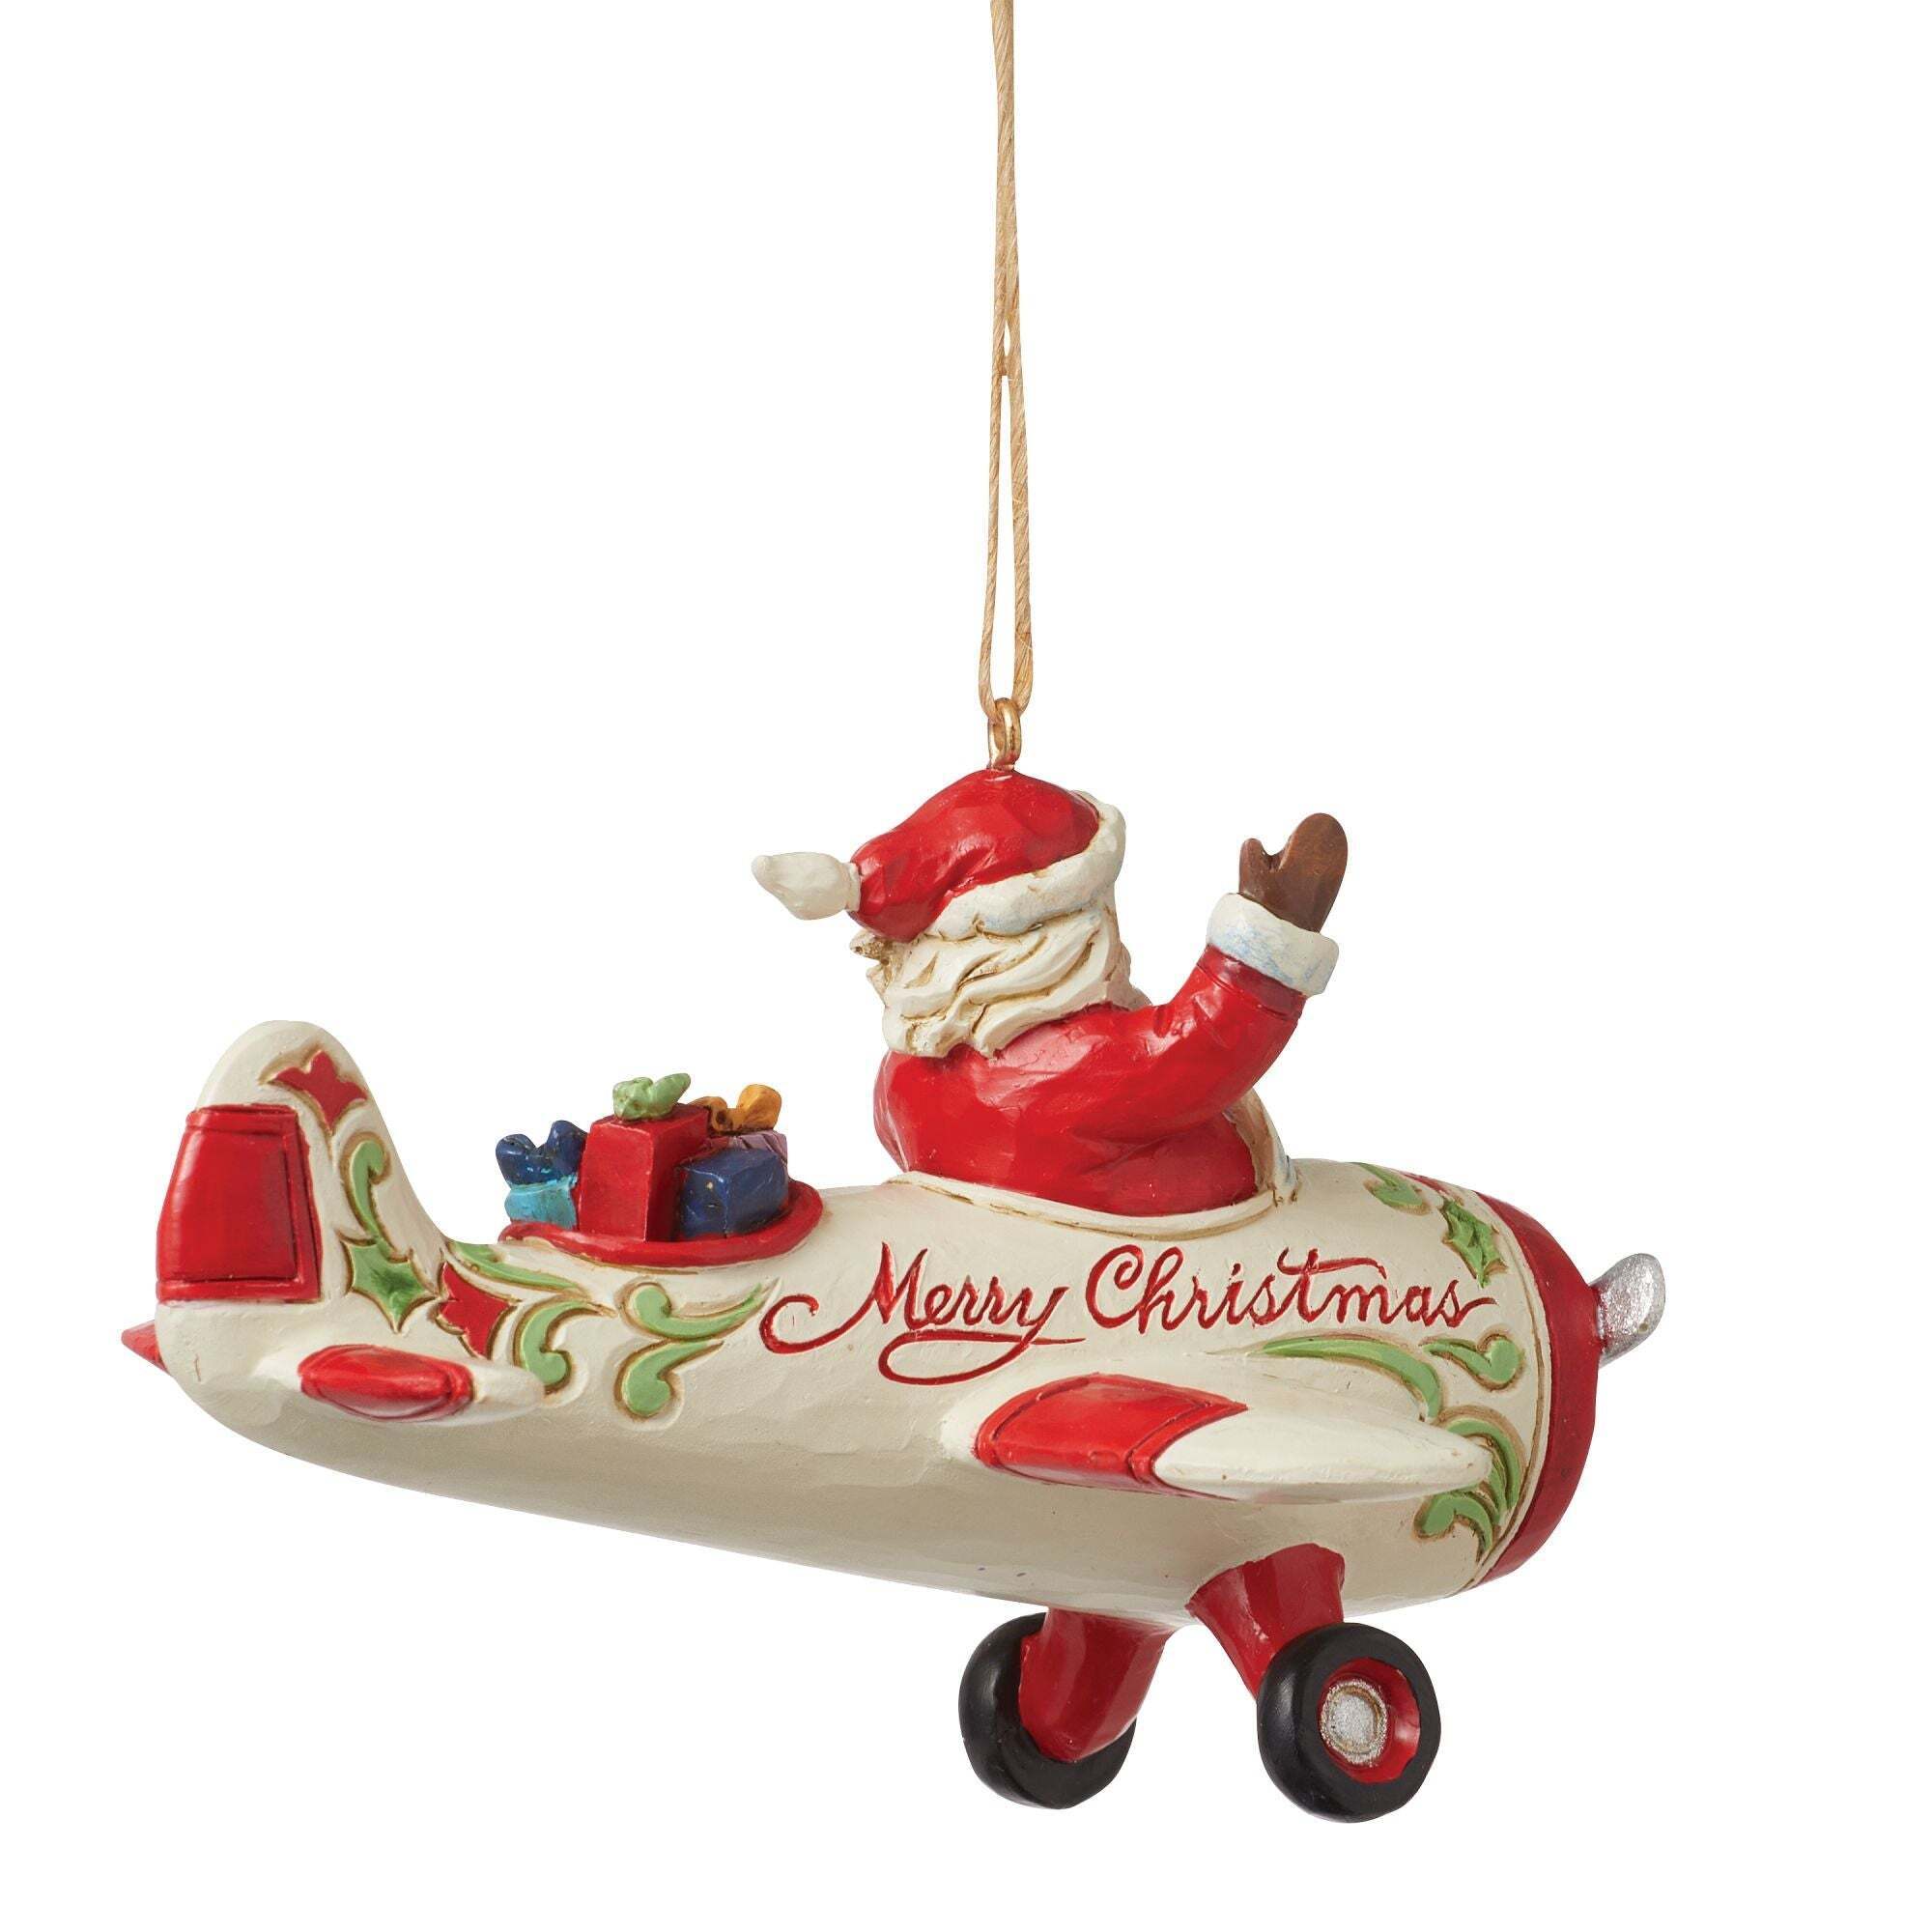 Santa in Airplane Ornament